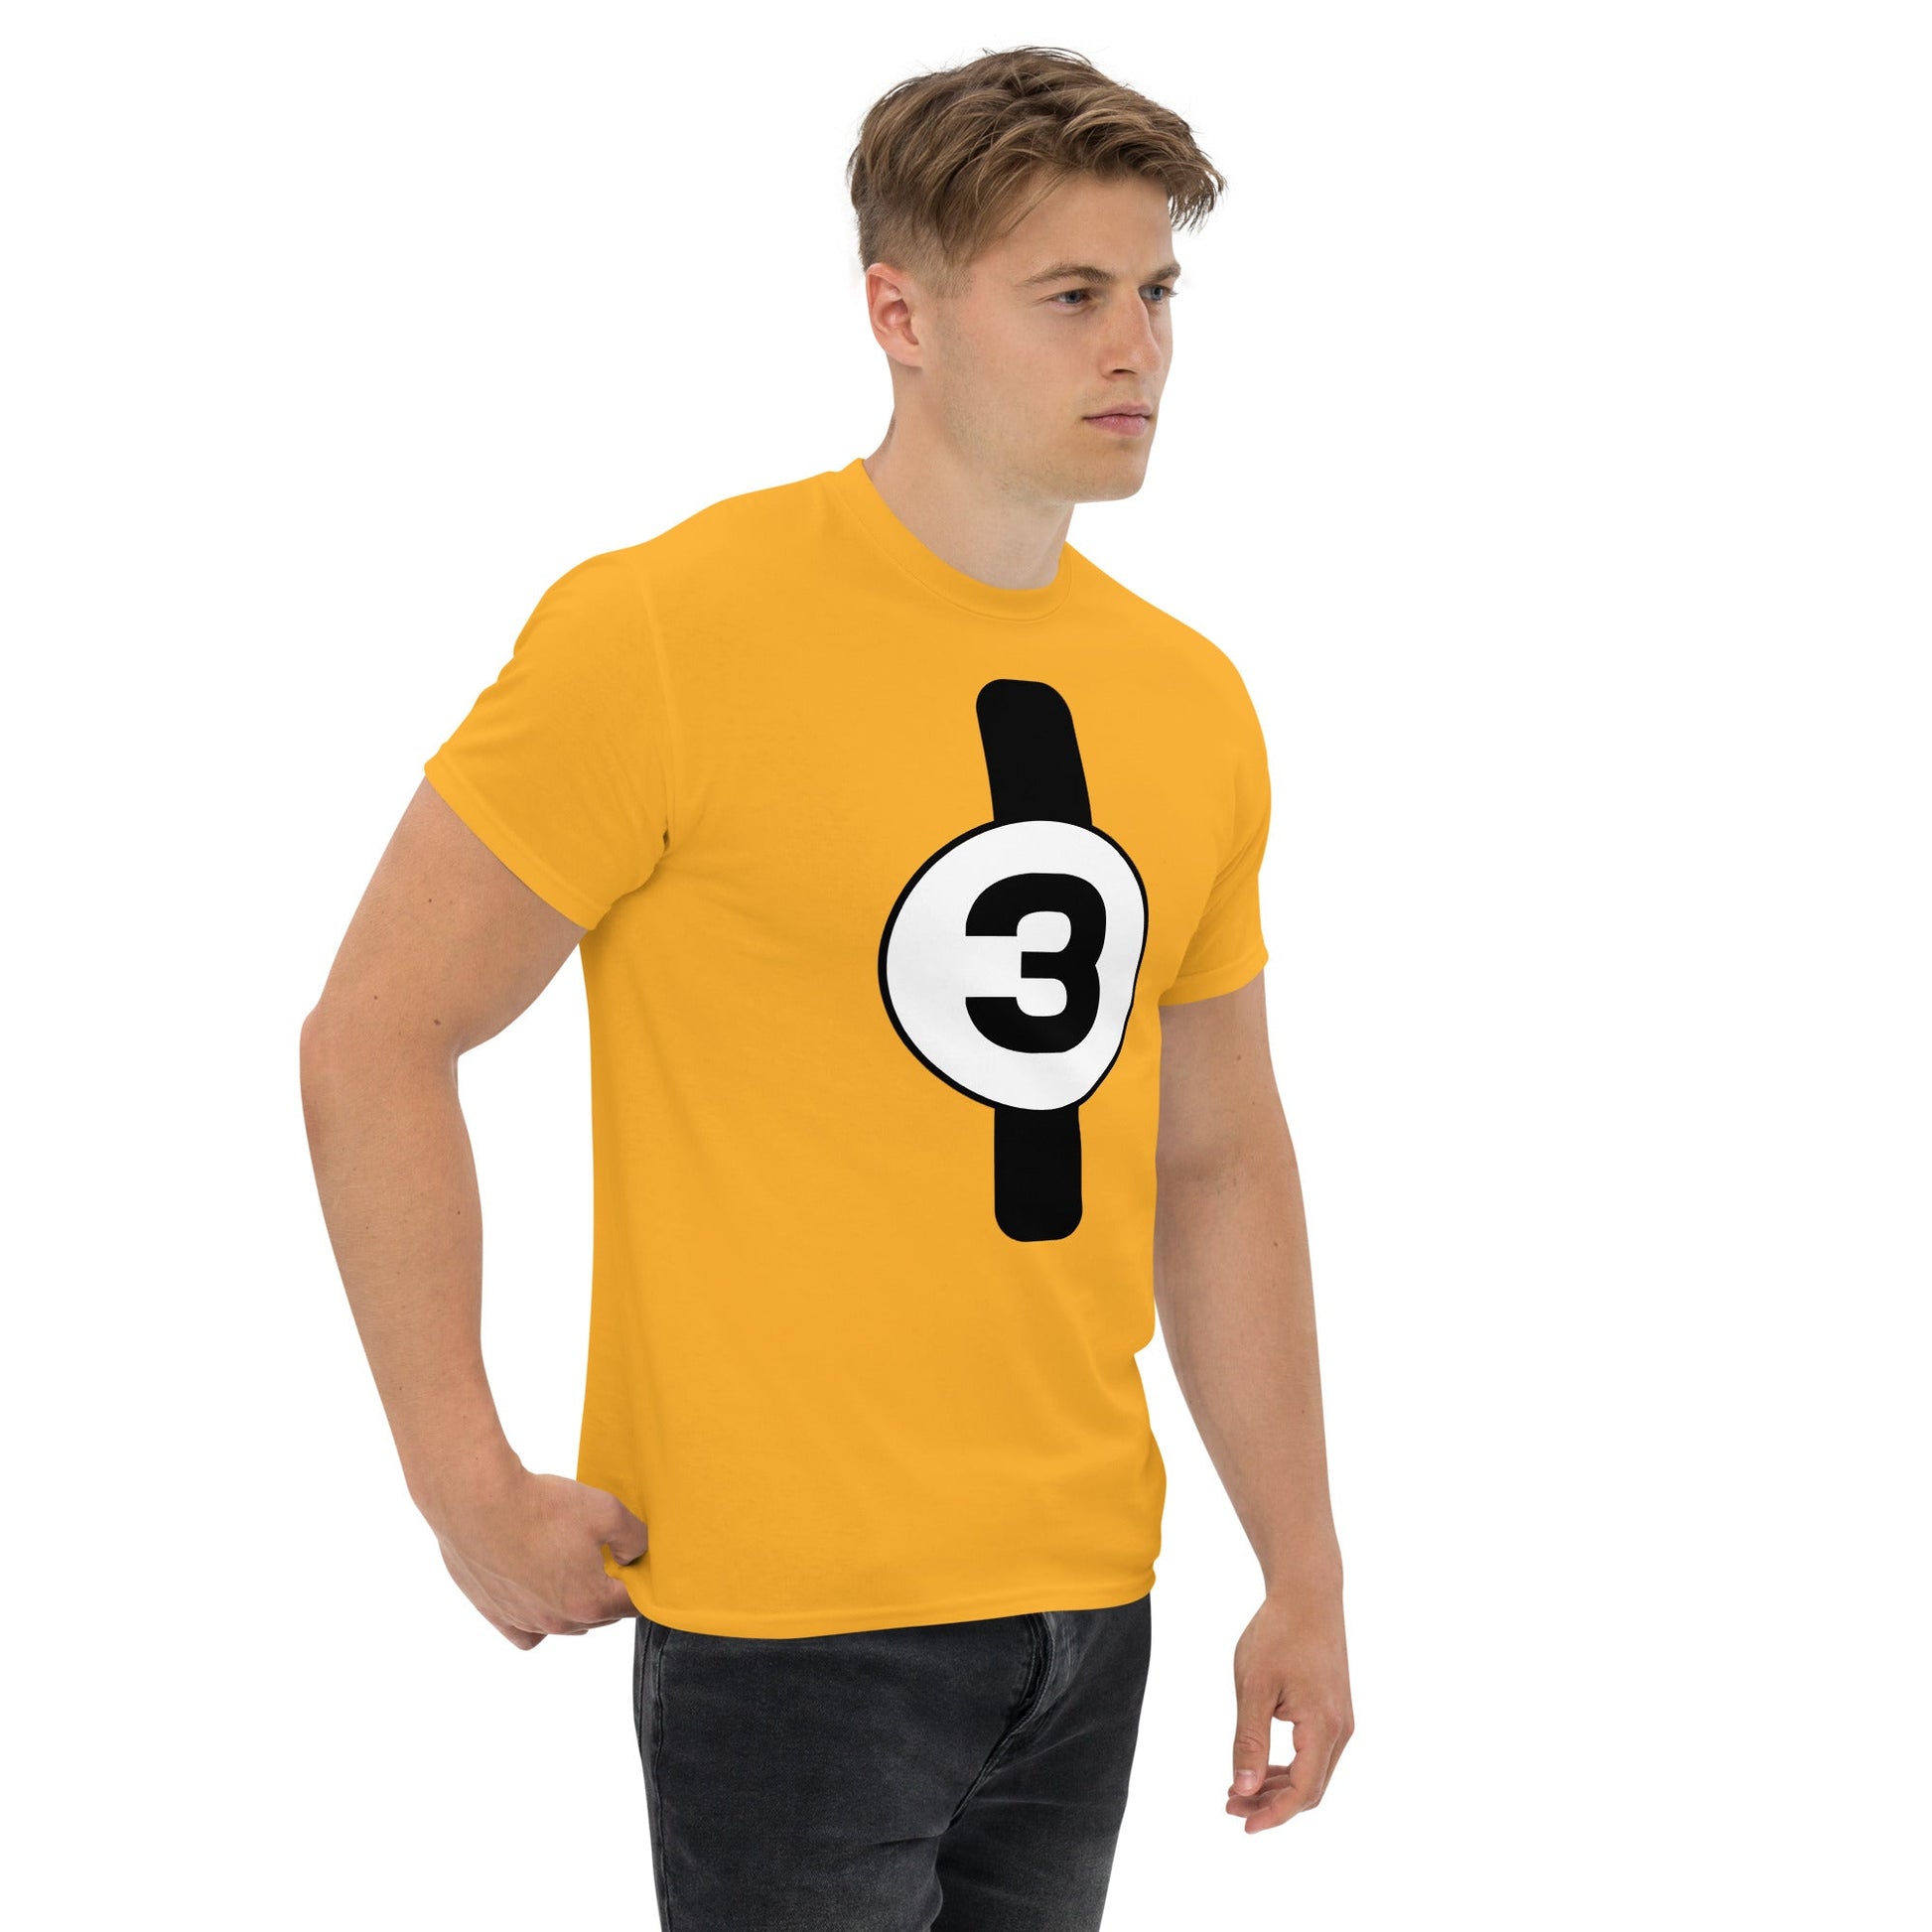 Joey Dunlop Road Racing Shirt - Road Racing Merchandise